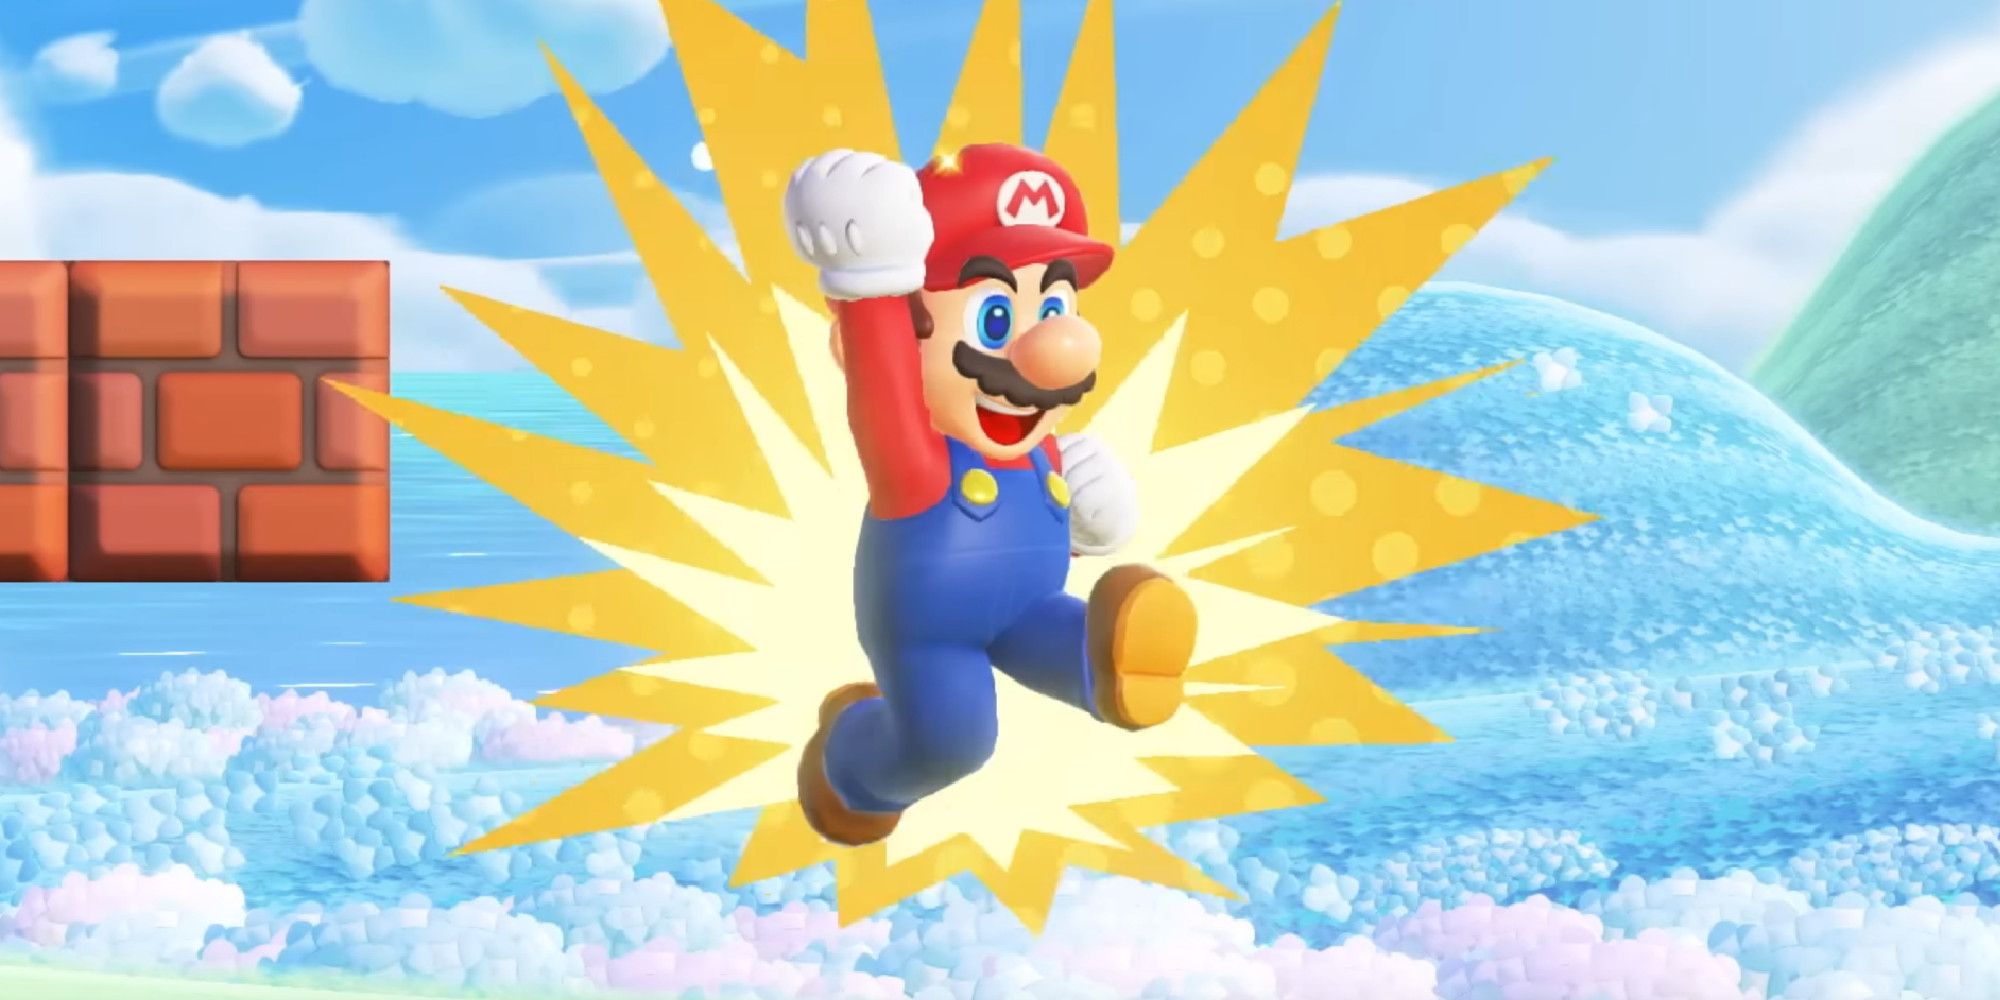 Super Mario Bros. Wonder: Nintendo recaptures Mario's old magic, Super  Mario